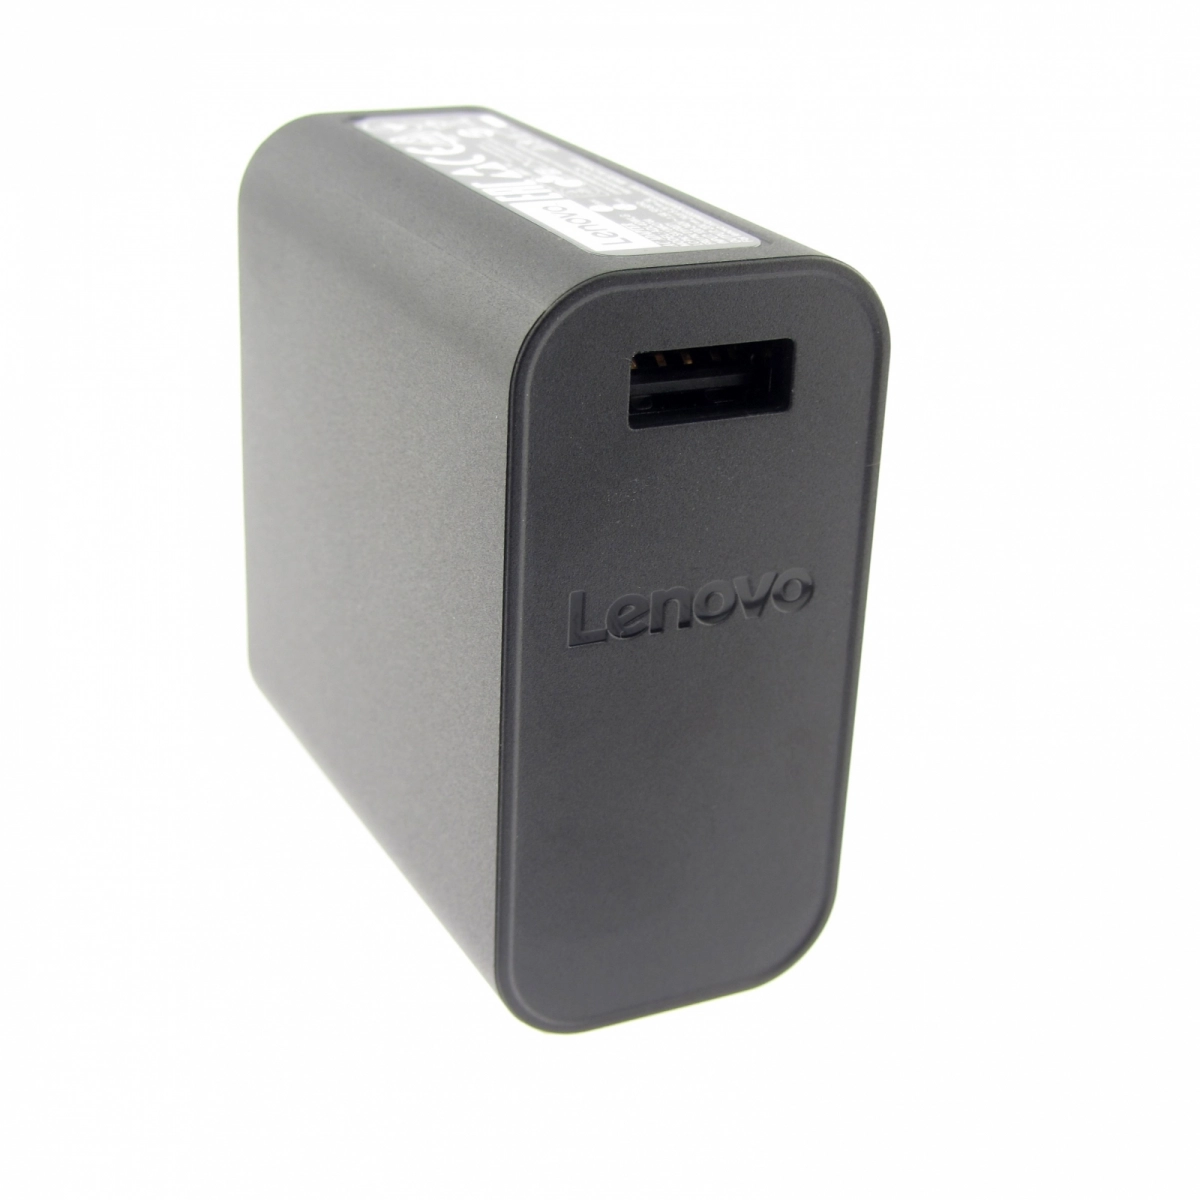 Original Netzteil für LENOVO ADL40WLF 36200577 36200578, 20V, 2A Stecker USB, ohne USB-Kabel